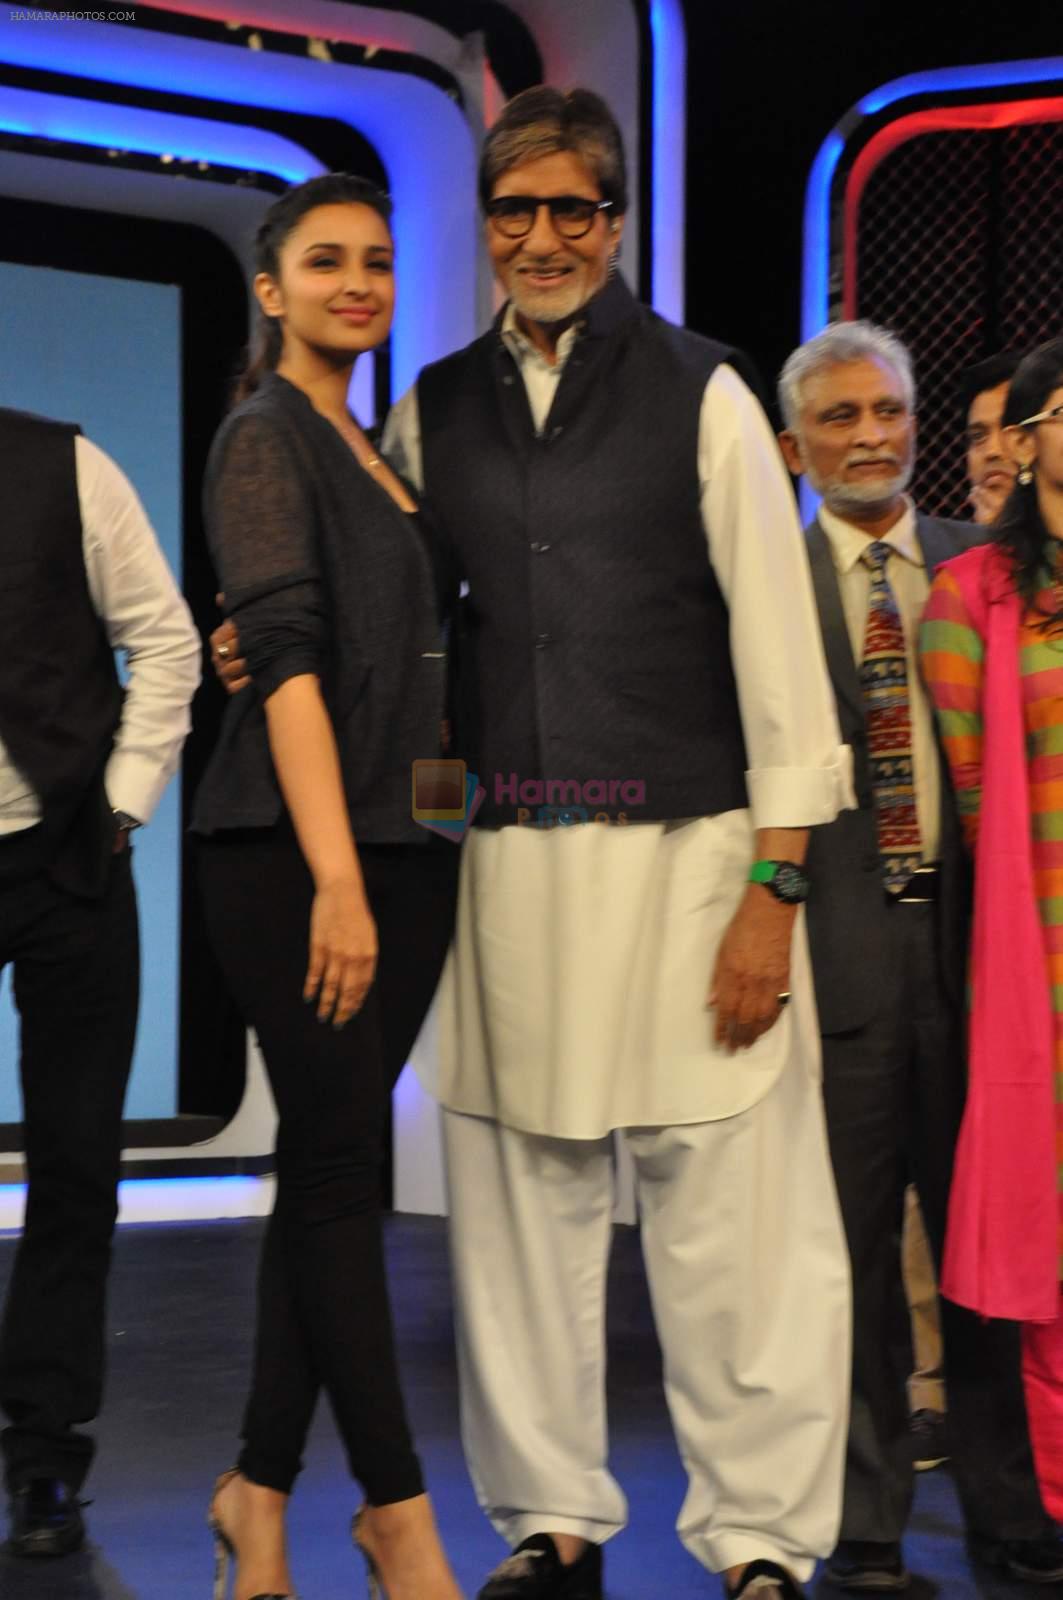 Parineeti Chopra, Amitabh Bachchan at NDTV Cleanathon on 17th Jan 2016